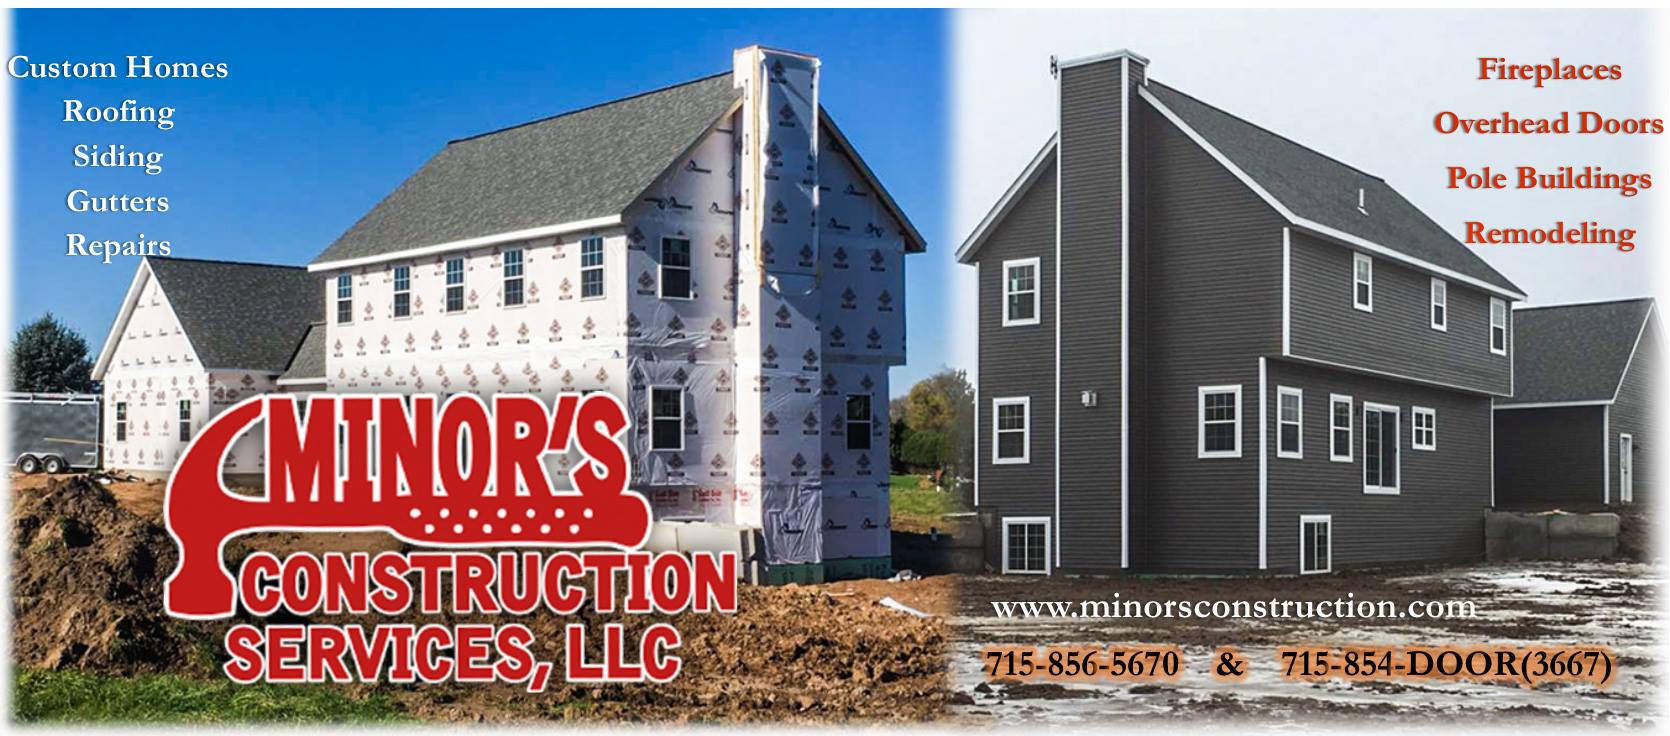 Minor's Construction Services LLC